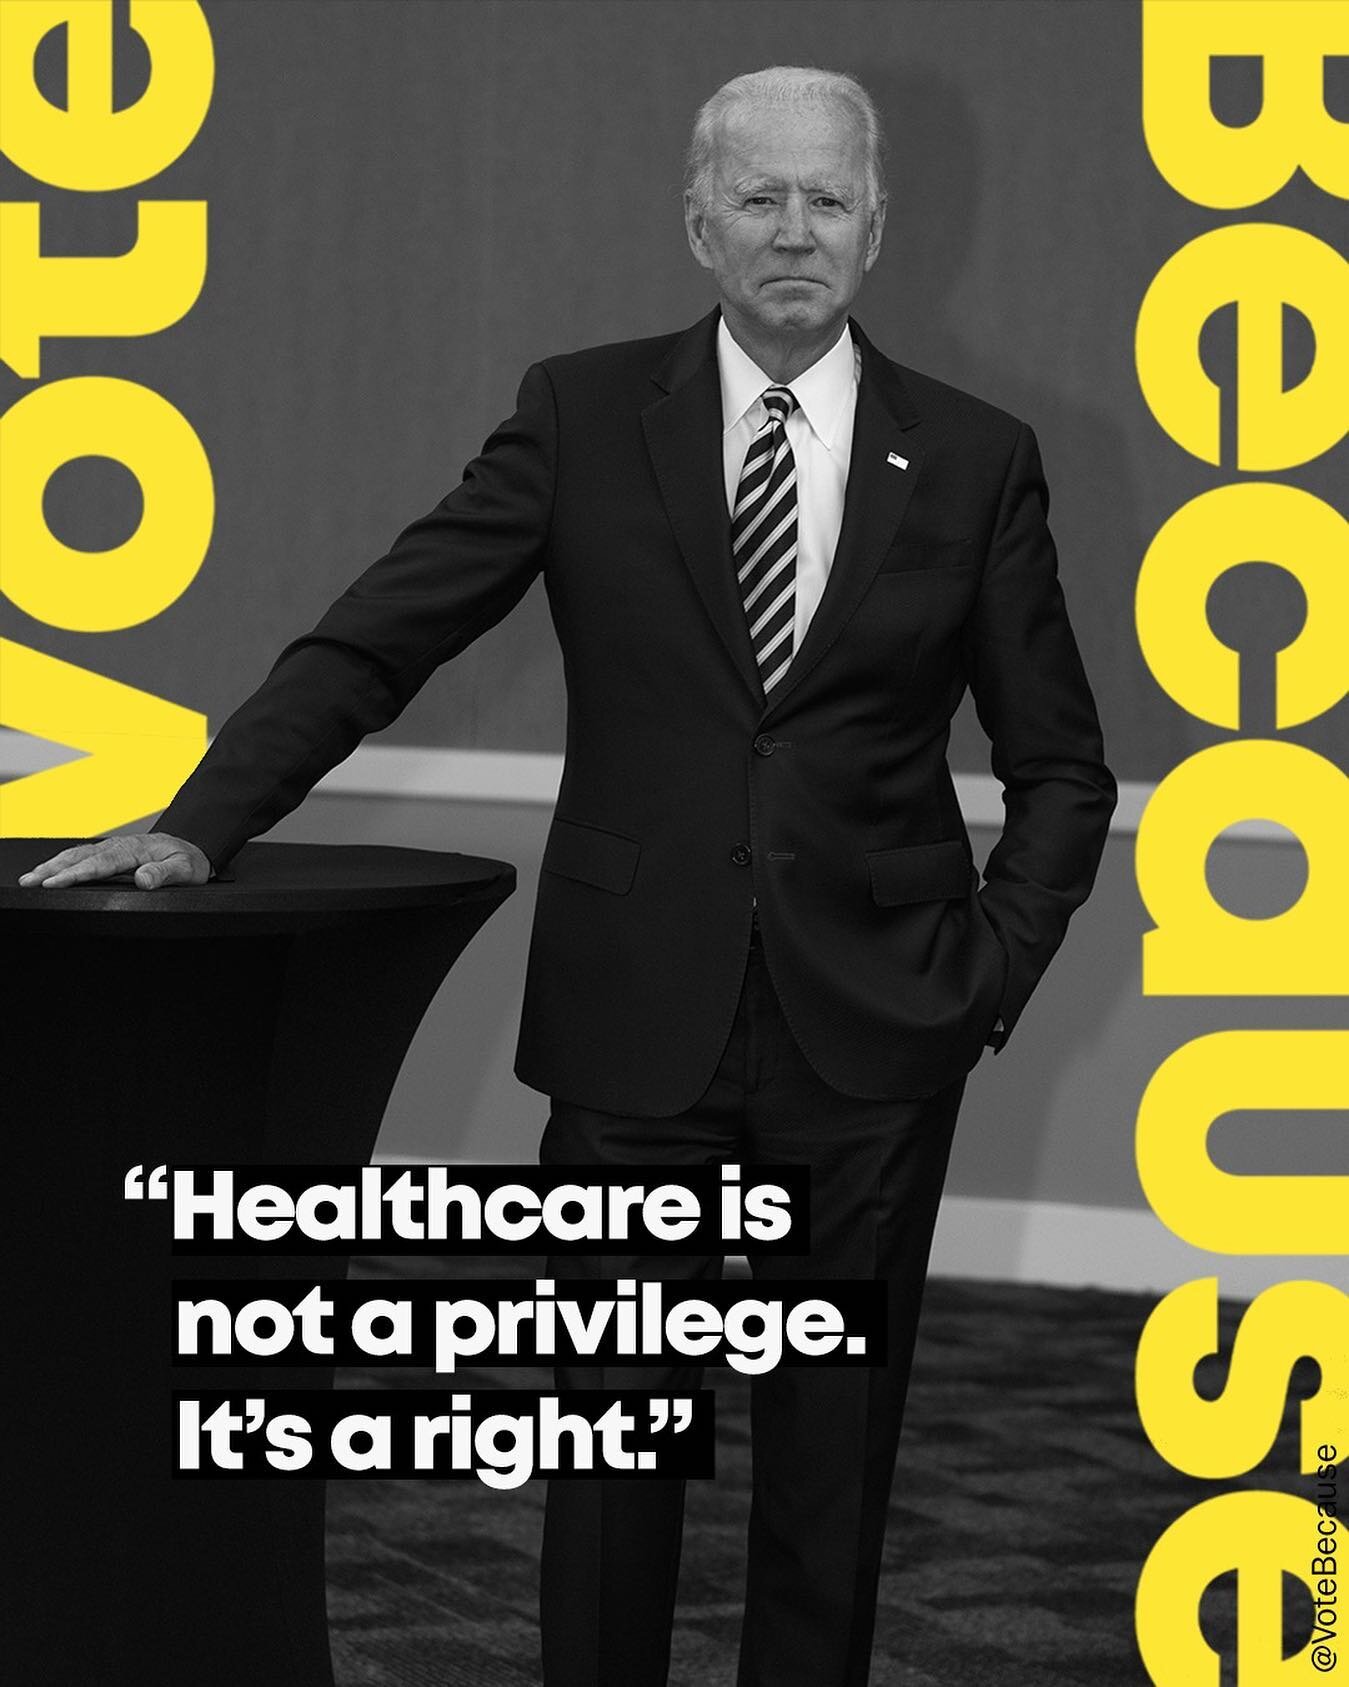 &ldquo;People deserve to have affordable healthcare. Period.&rdquo; 
#VoteBecause #Biden2020 #BidenHarris2020 #HealthCareForAll @joebiden